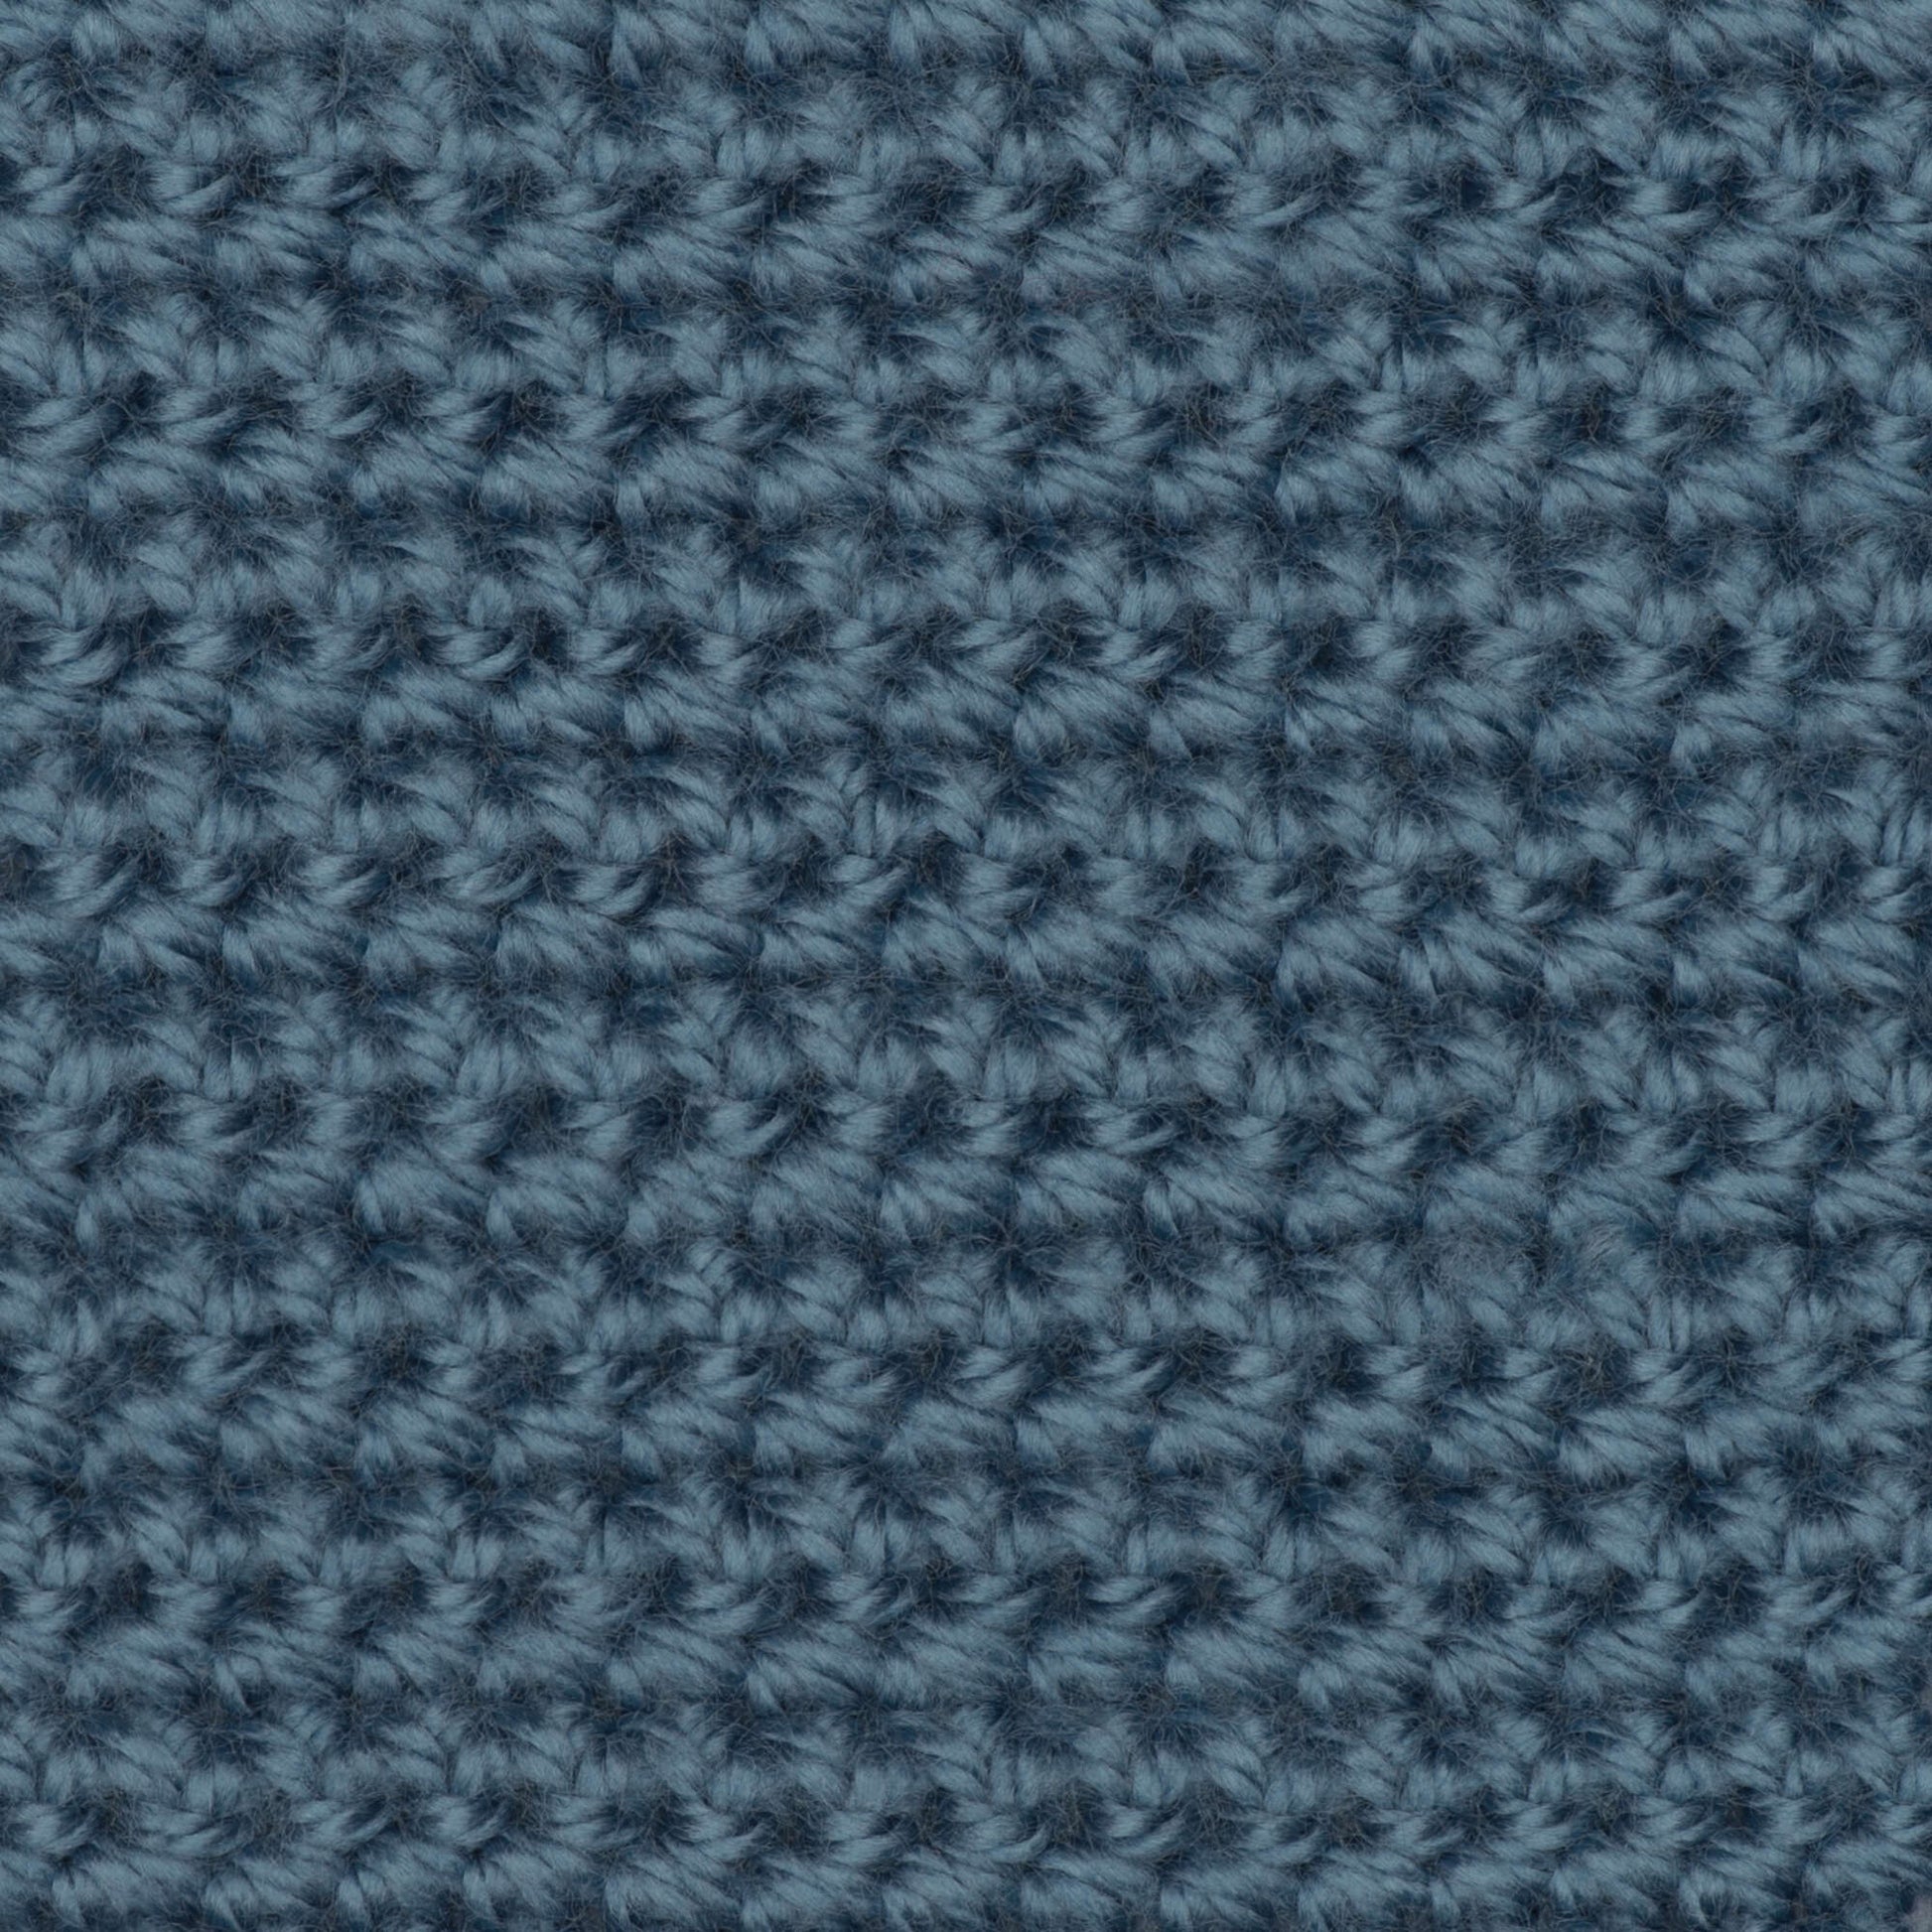 Bernat Softee Baby Yarn - Discontinued Shades Blue Jeans